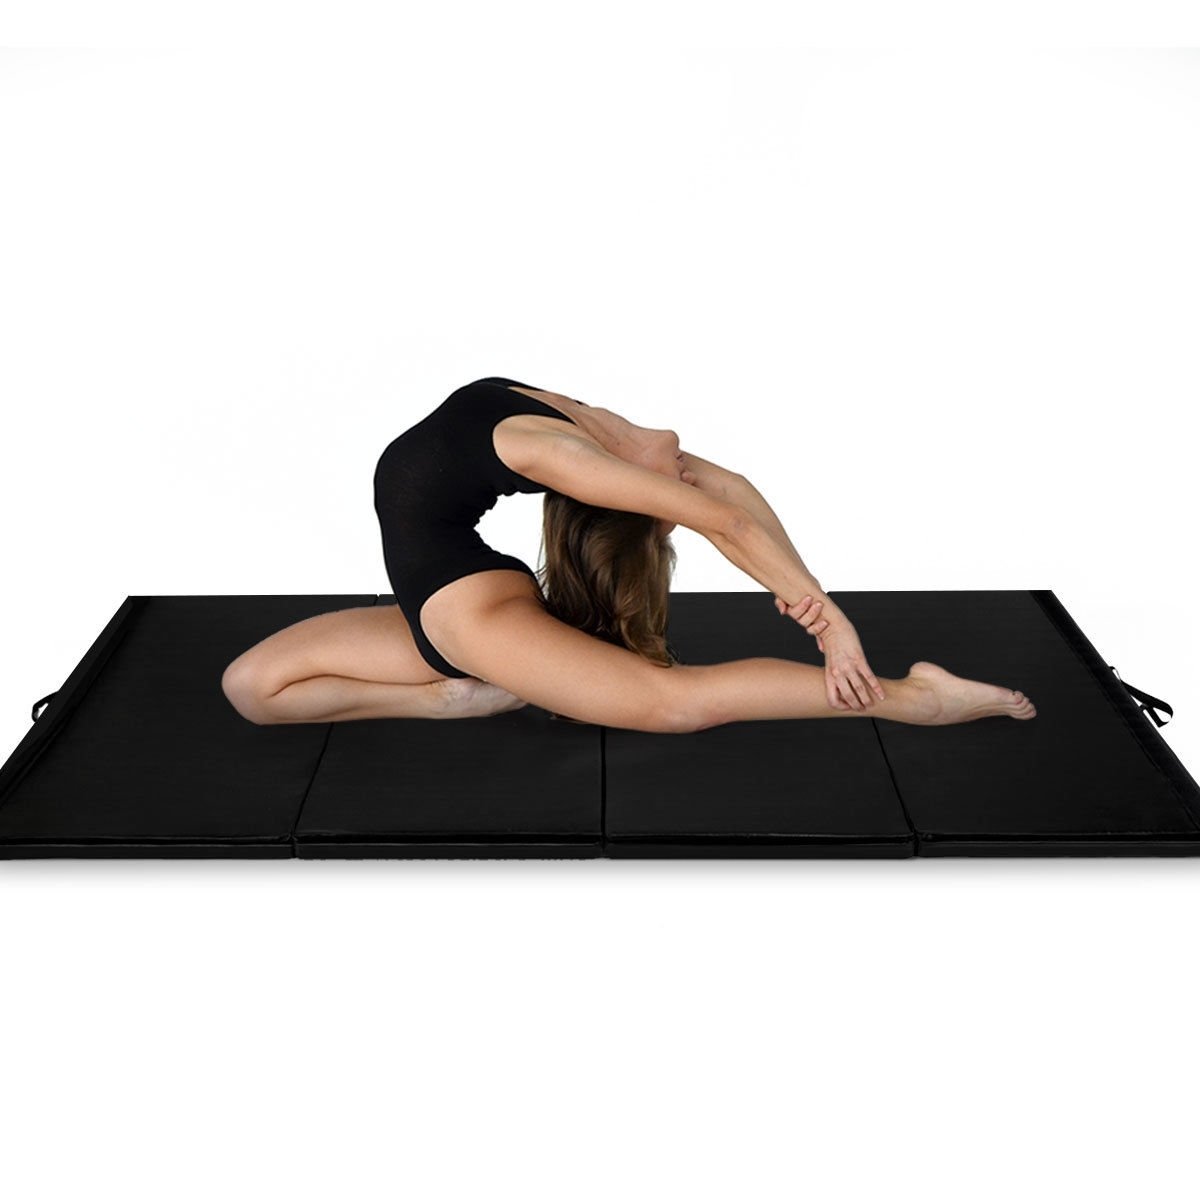 4' x 8' x 2 Inch Folding Panel Exercise Gymnastics Mat, Black